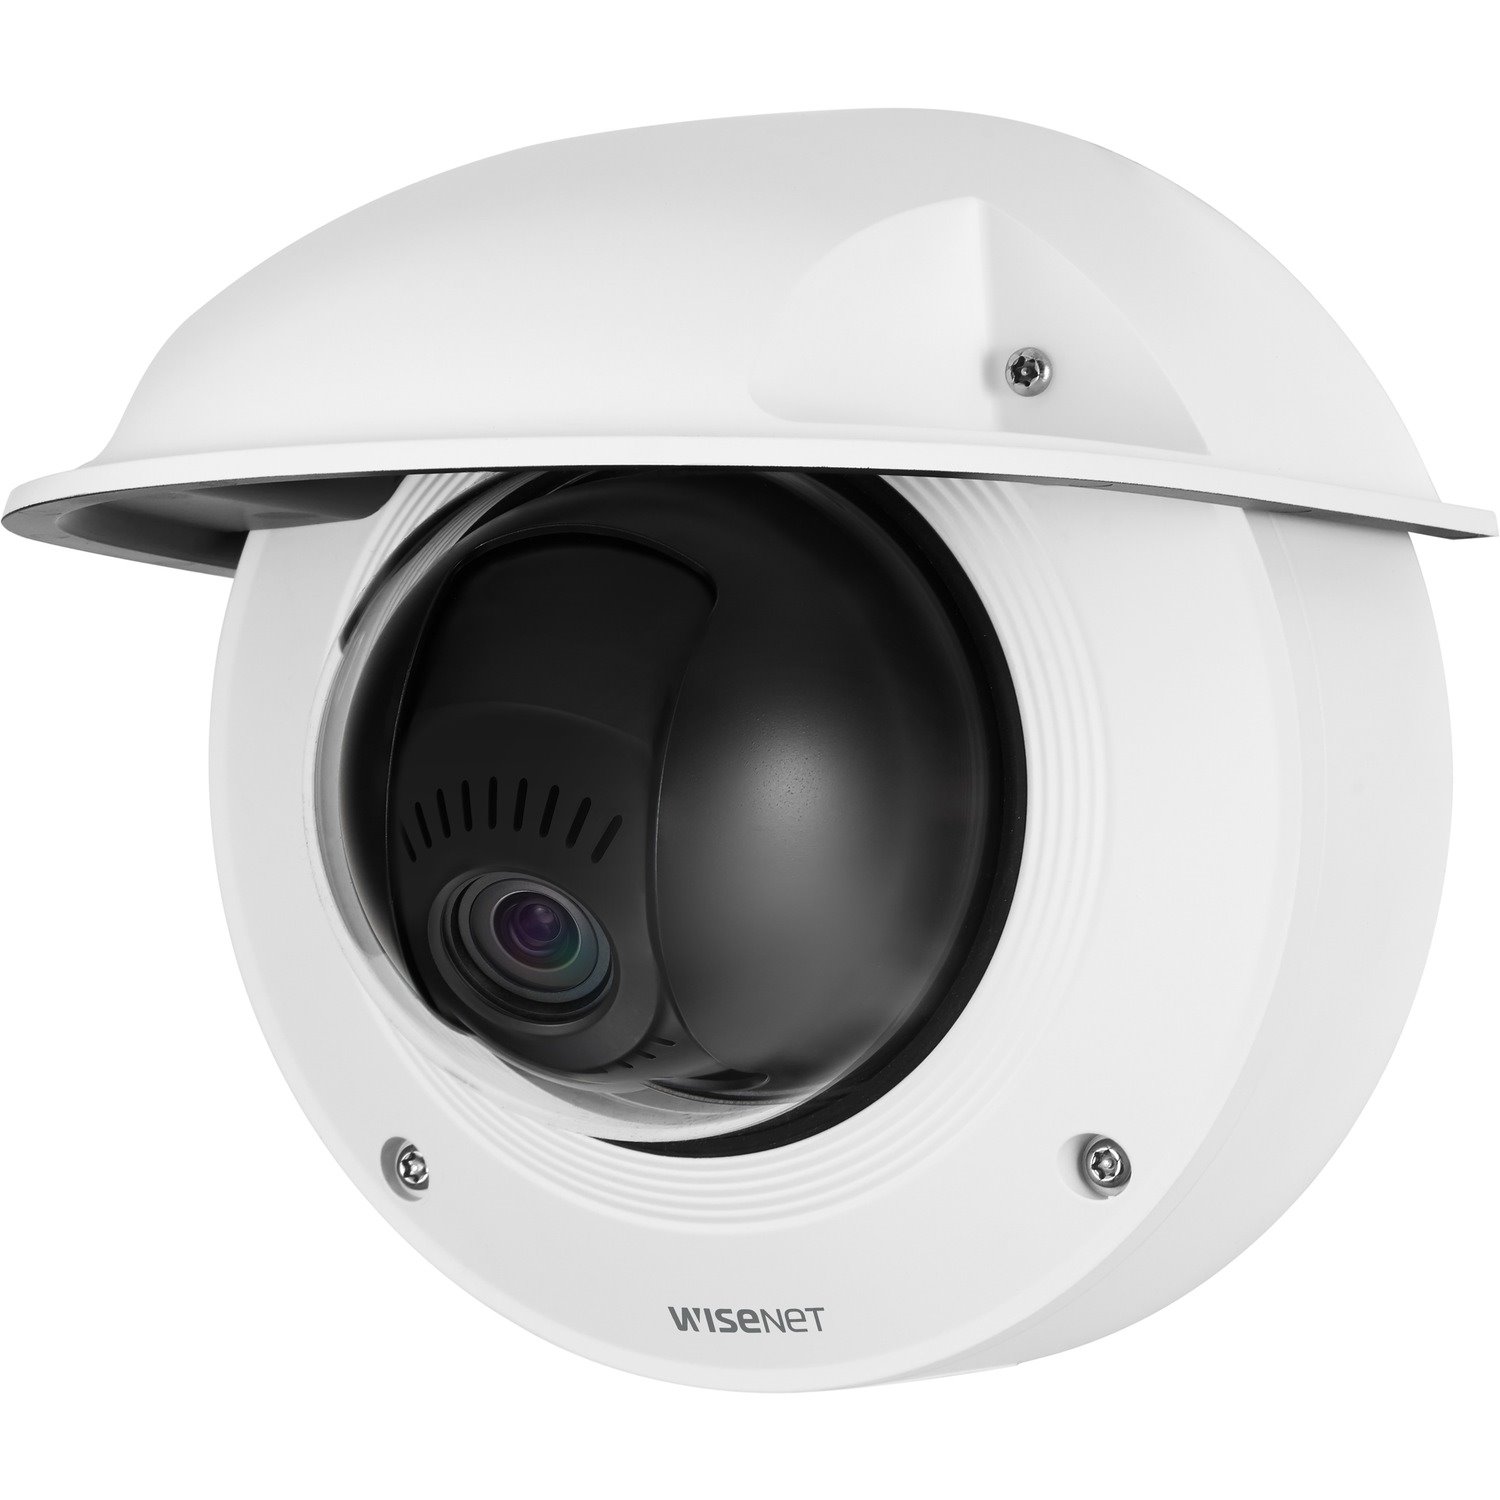 Wisenet XNV-8081Z 5 Megapixel Outdoor Network Camera - Color, Monochrome - Dome